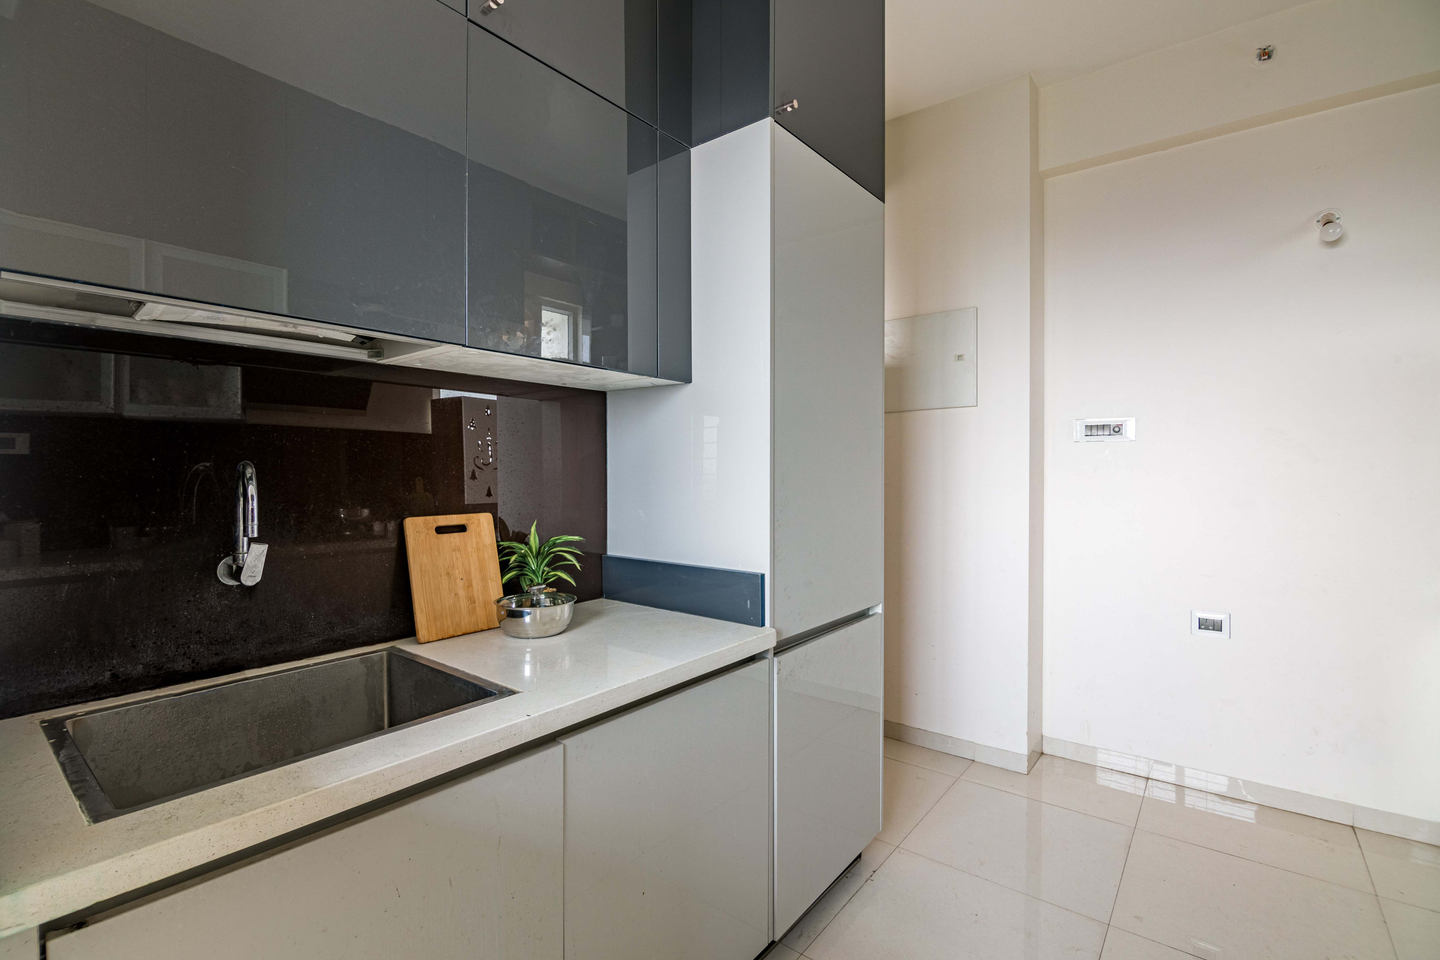 Modern Parallel Kitchen Design With Closed Storage Cabinets